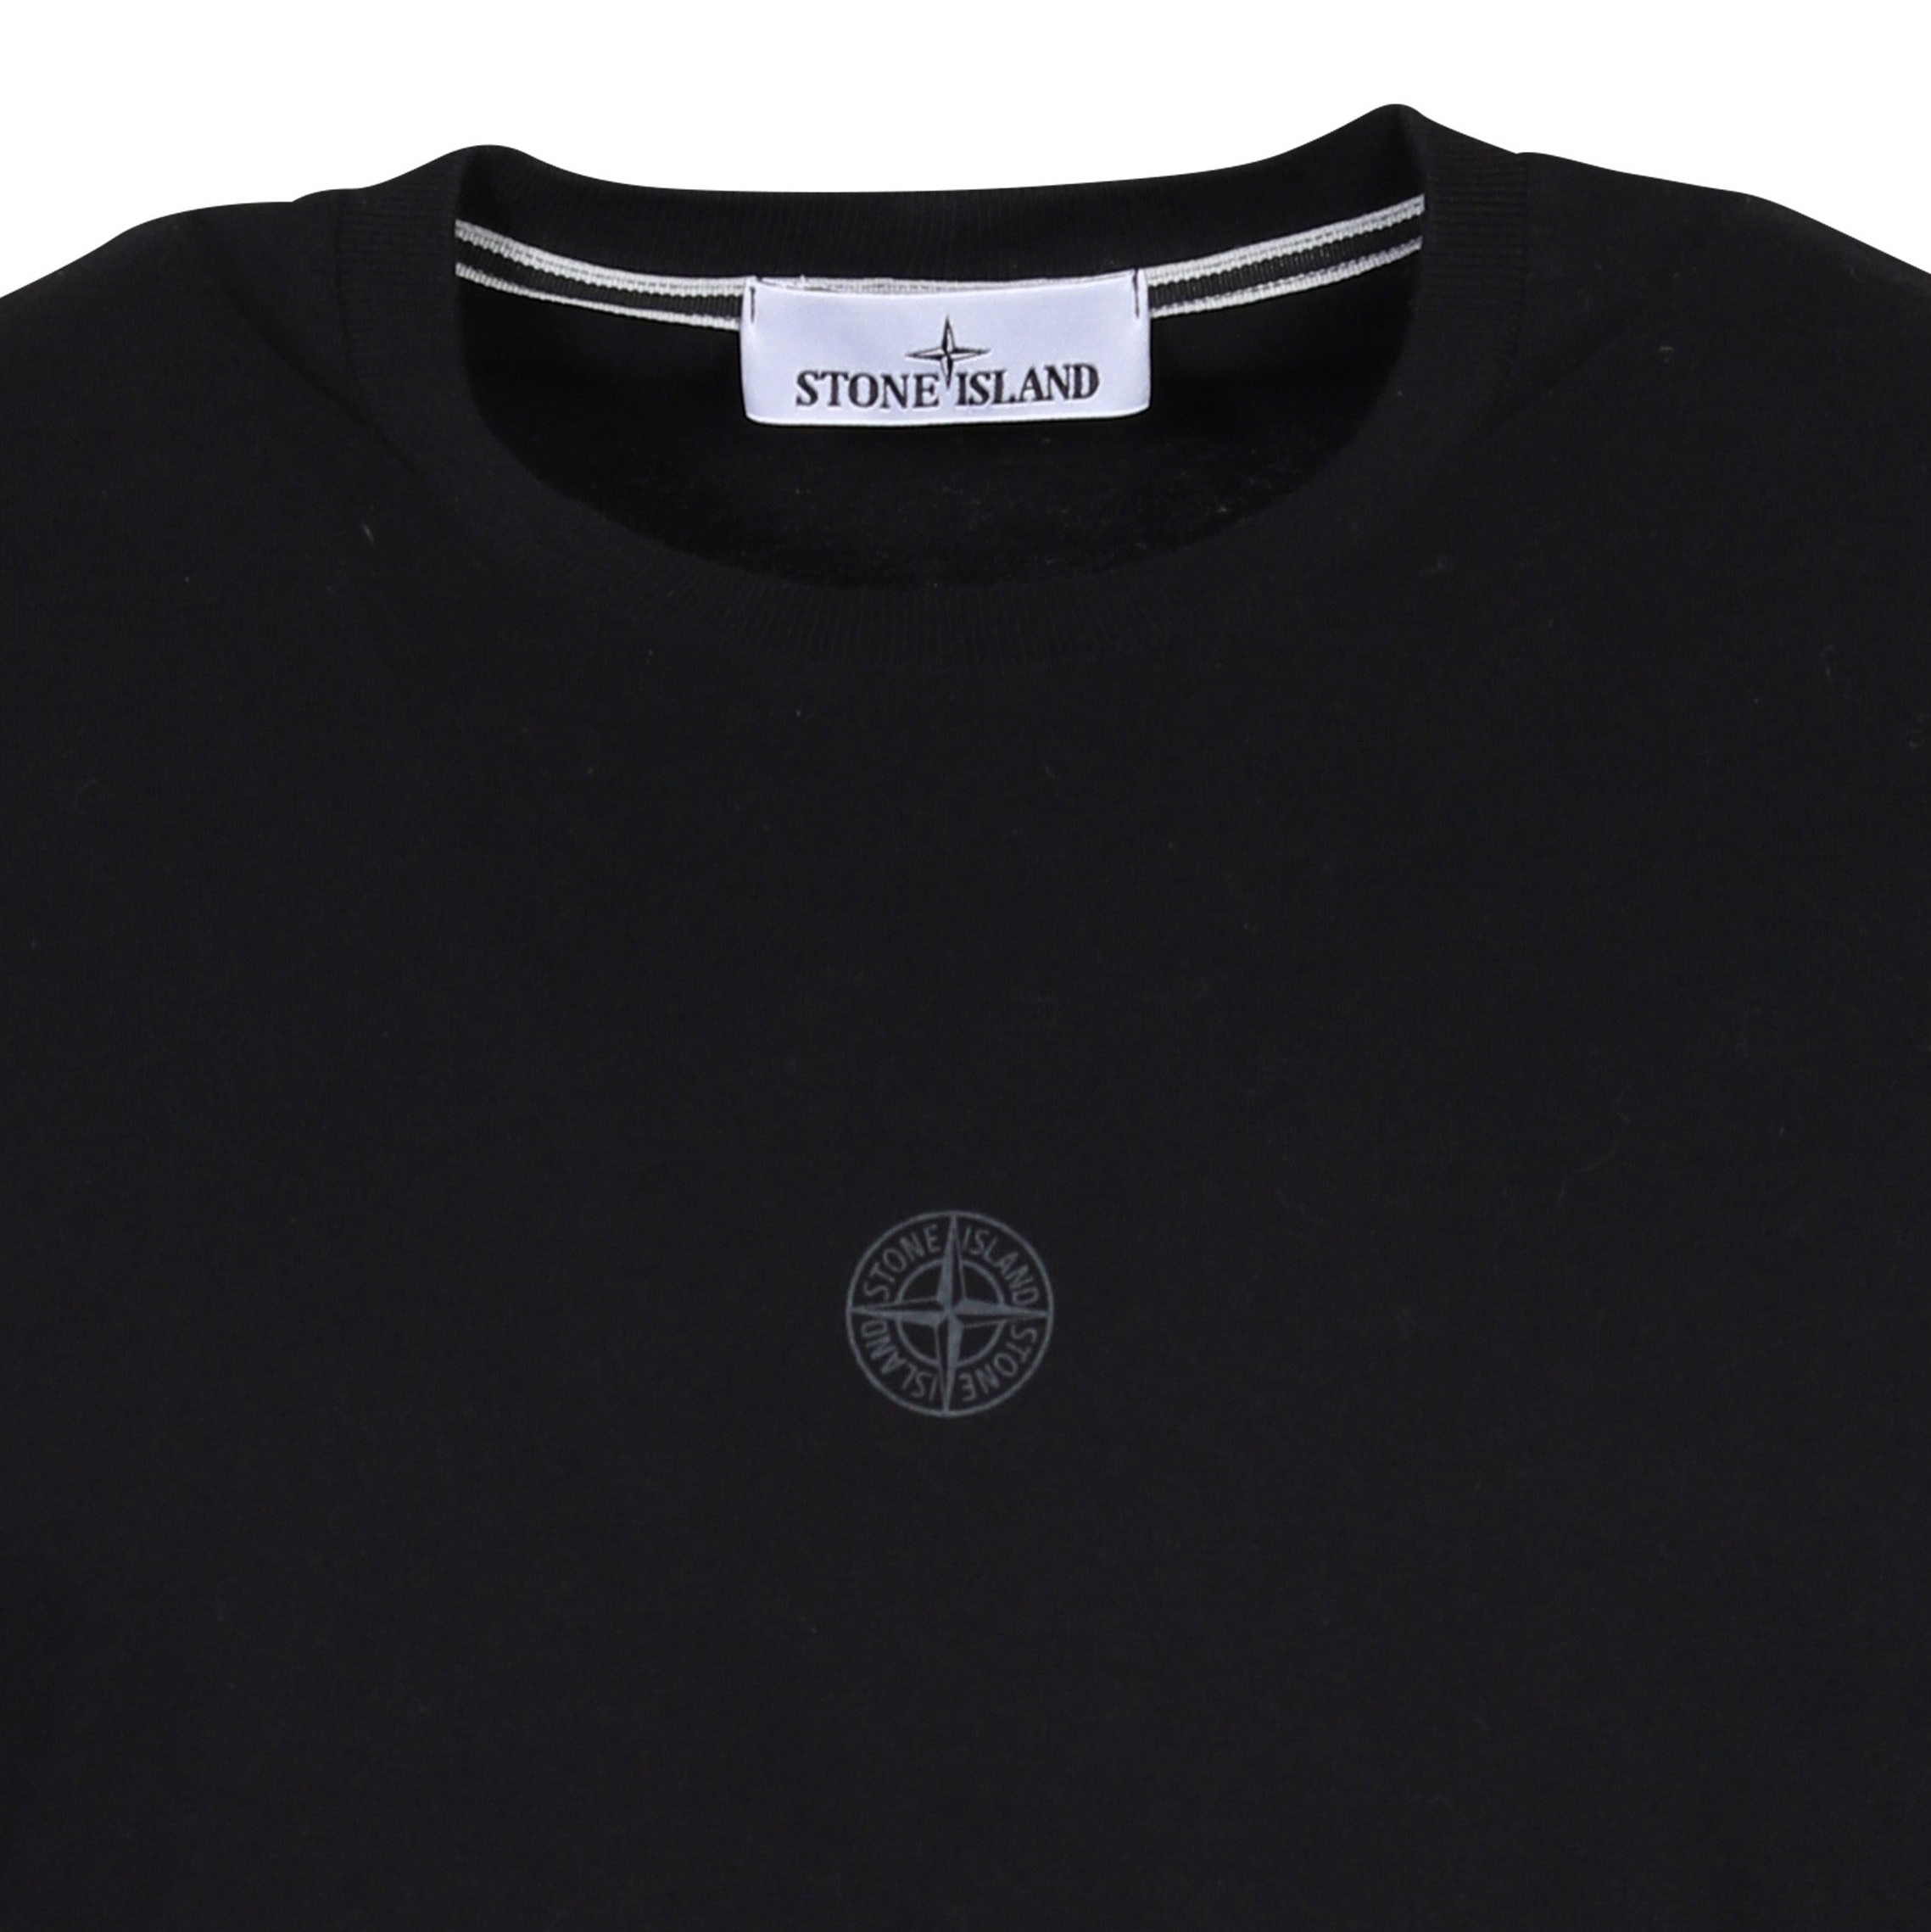 Stone Island Backprinted T-Shirt in Black S